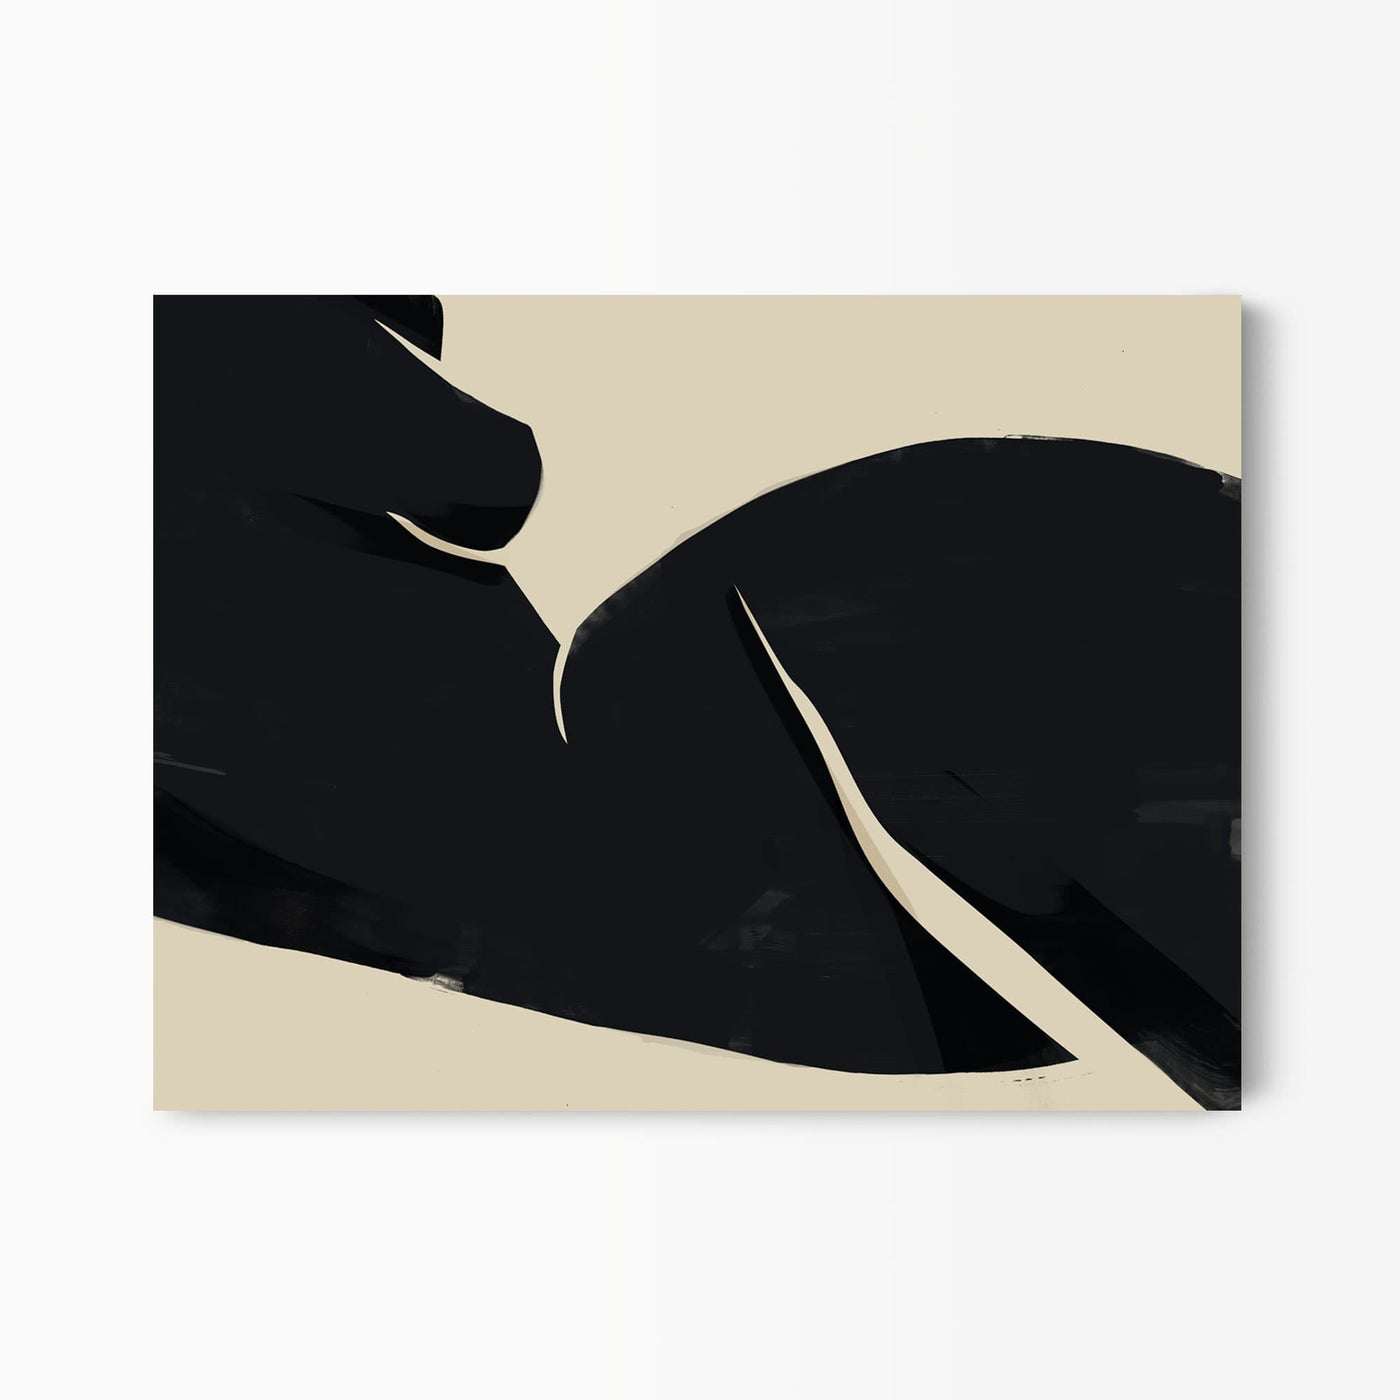 Green Lili 40x30cm (16x12") / Unframed Print Abstract Nude Print